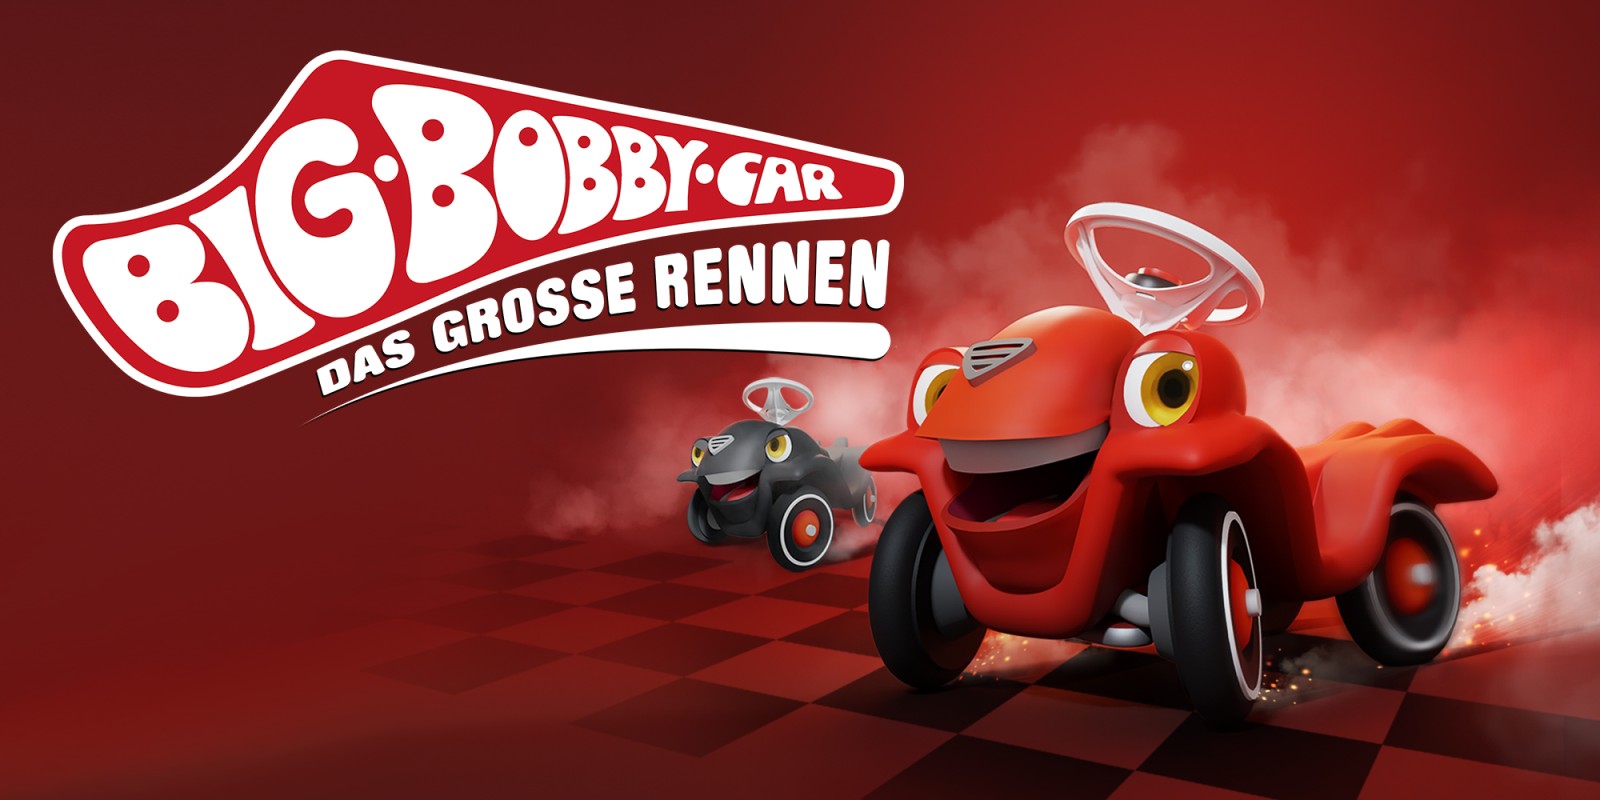 BIG-Bobby-Car - Das Grosse Rennen